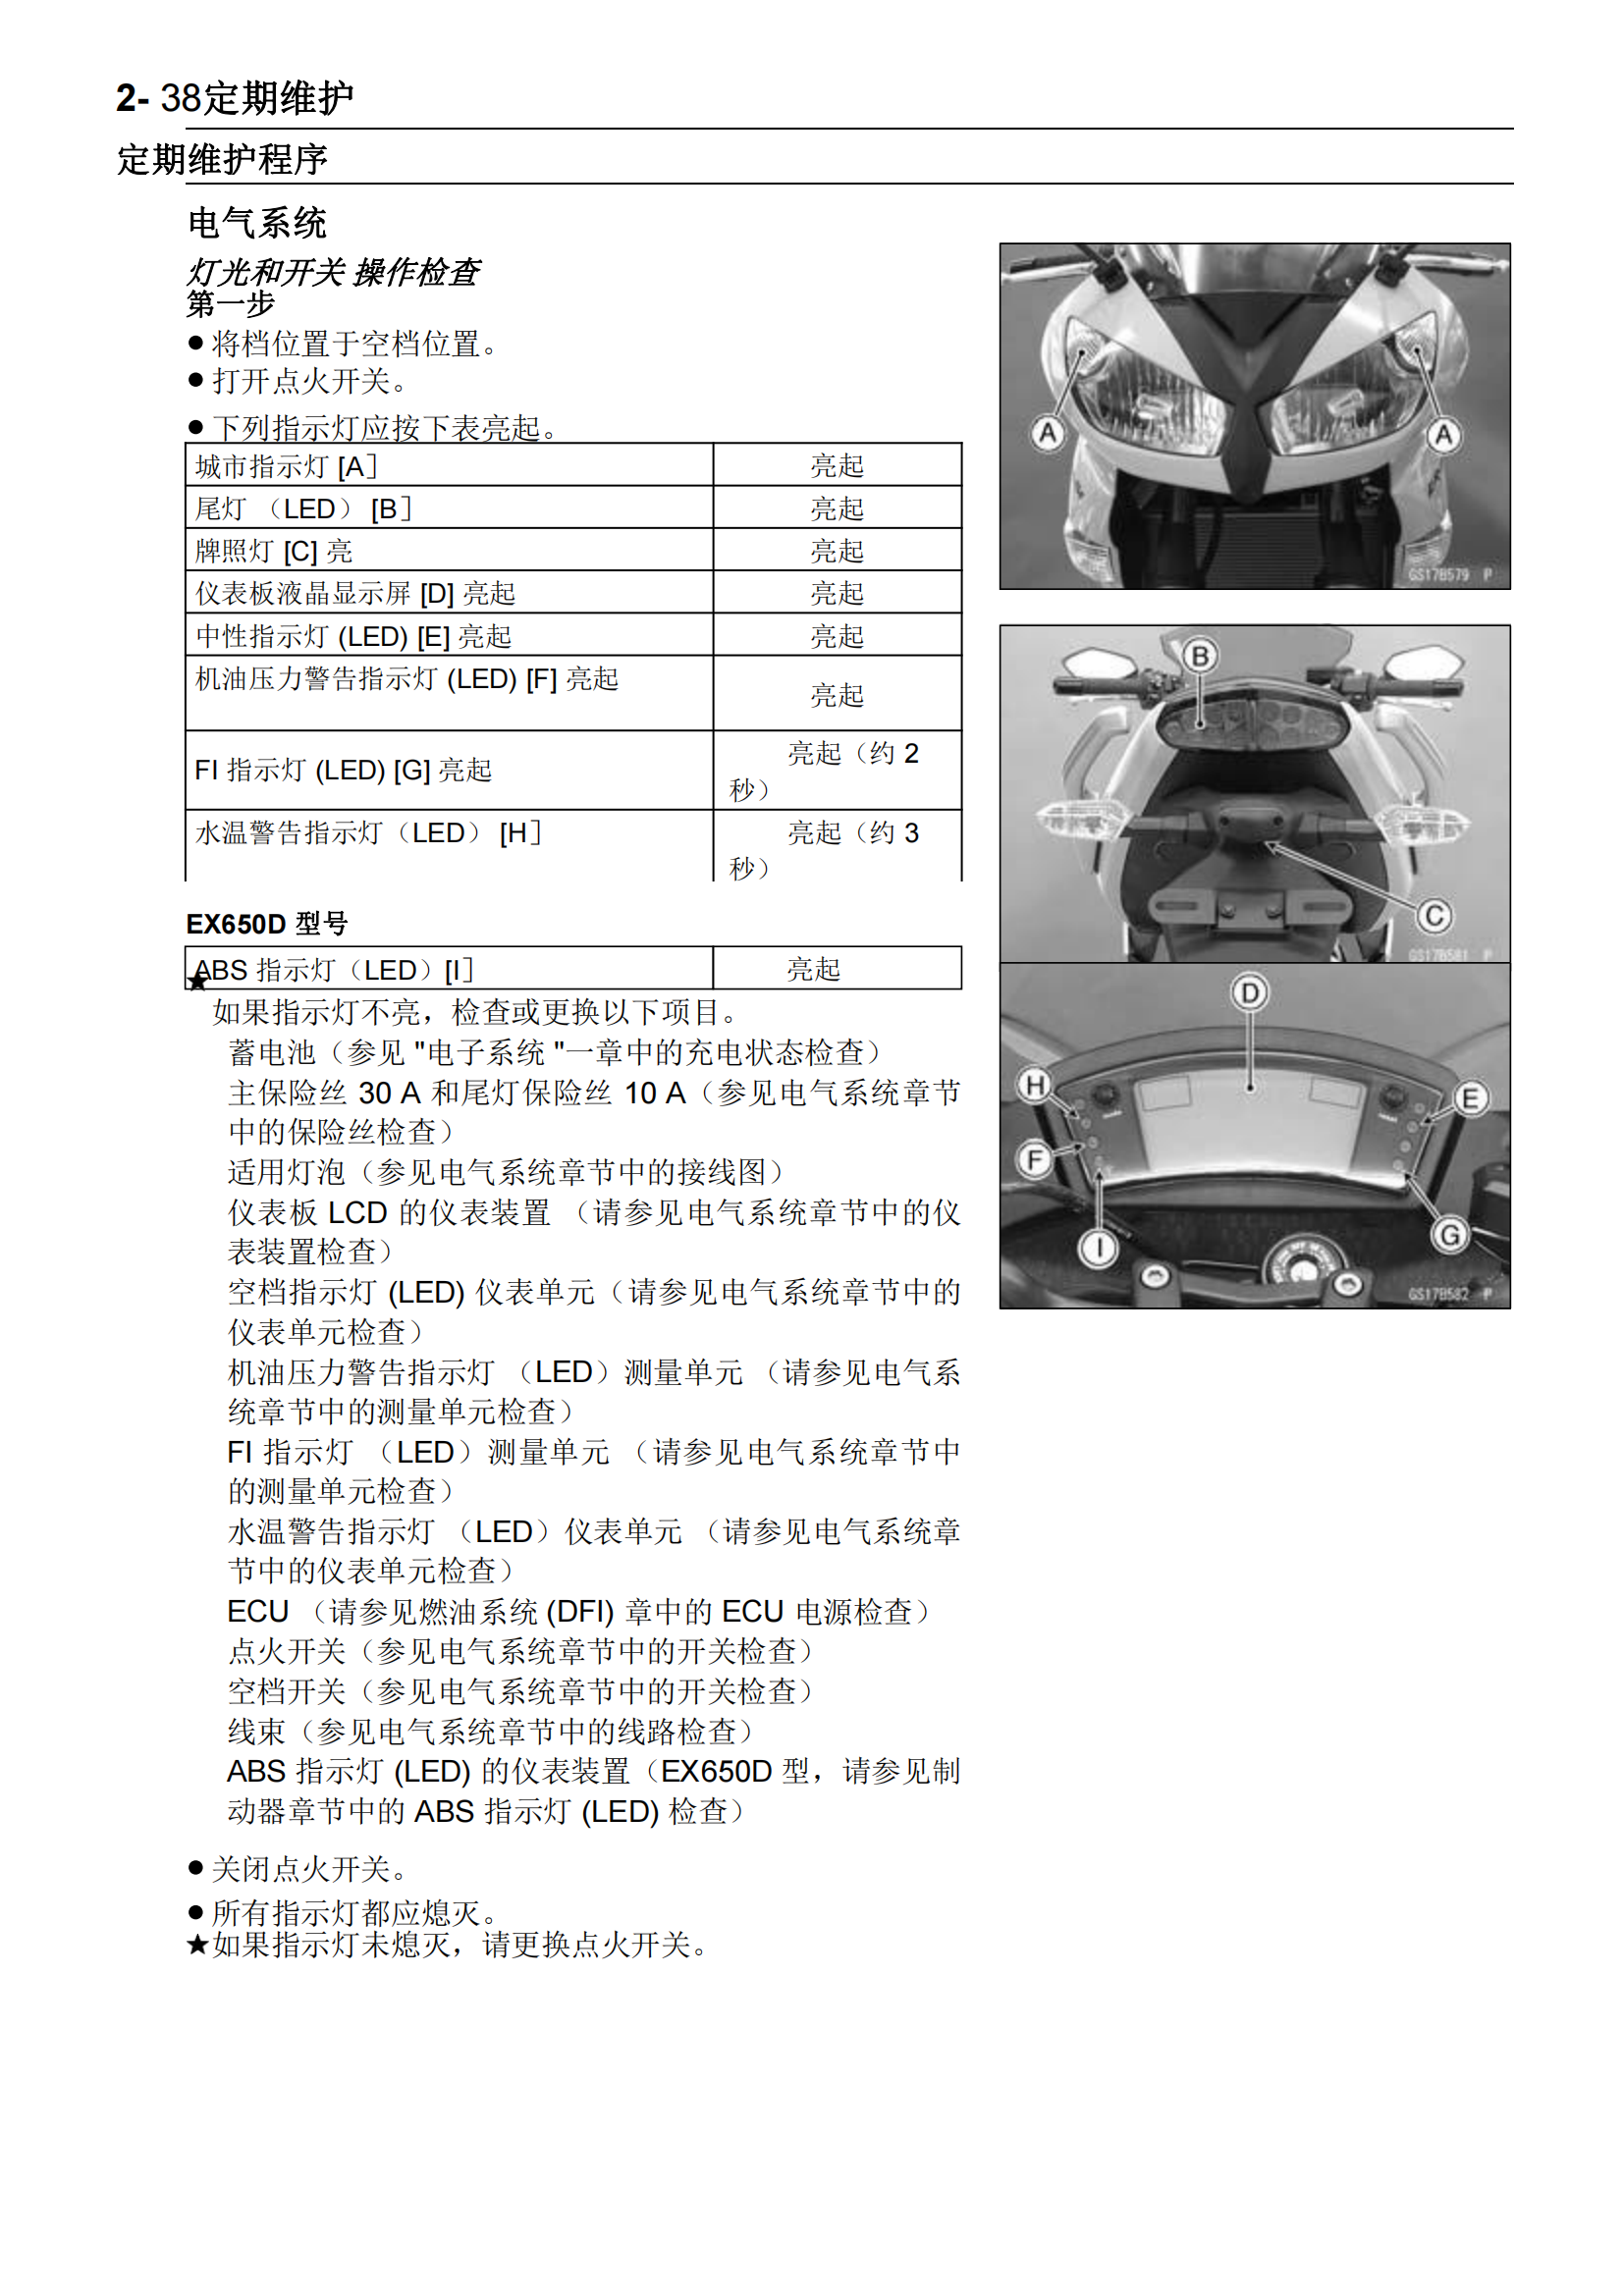 简体中文2009-2011年川崎er6f abs ninja 650r abs er-6f 维修手册插图3